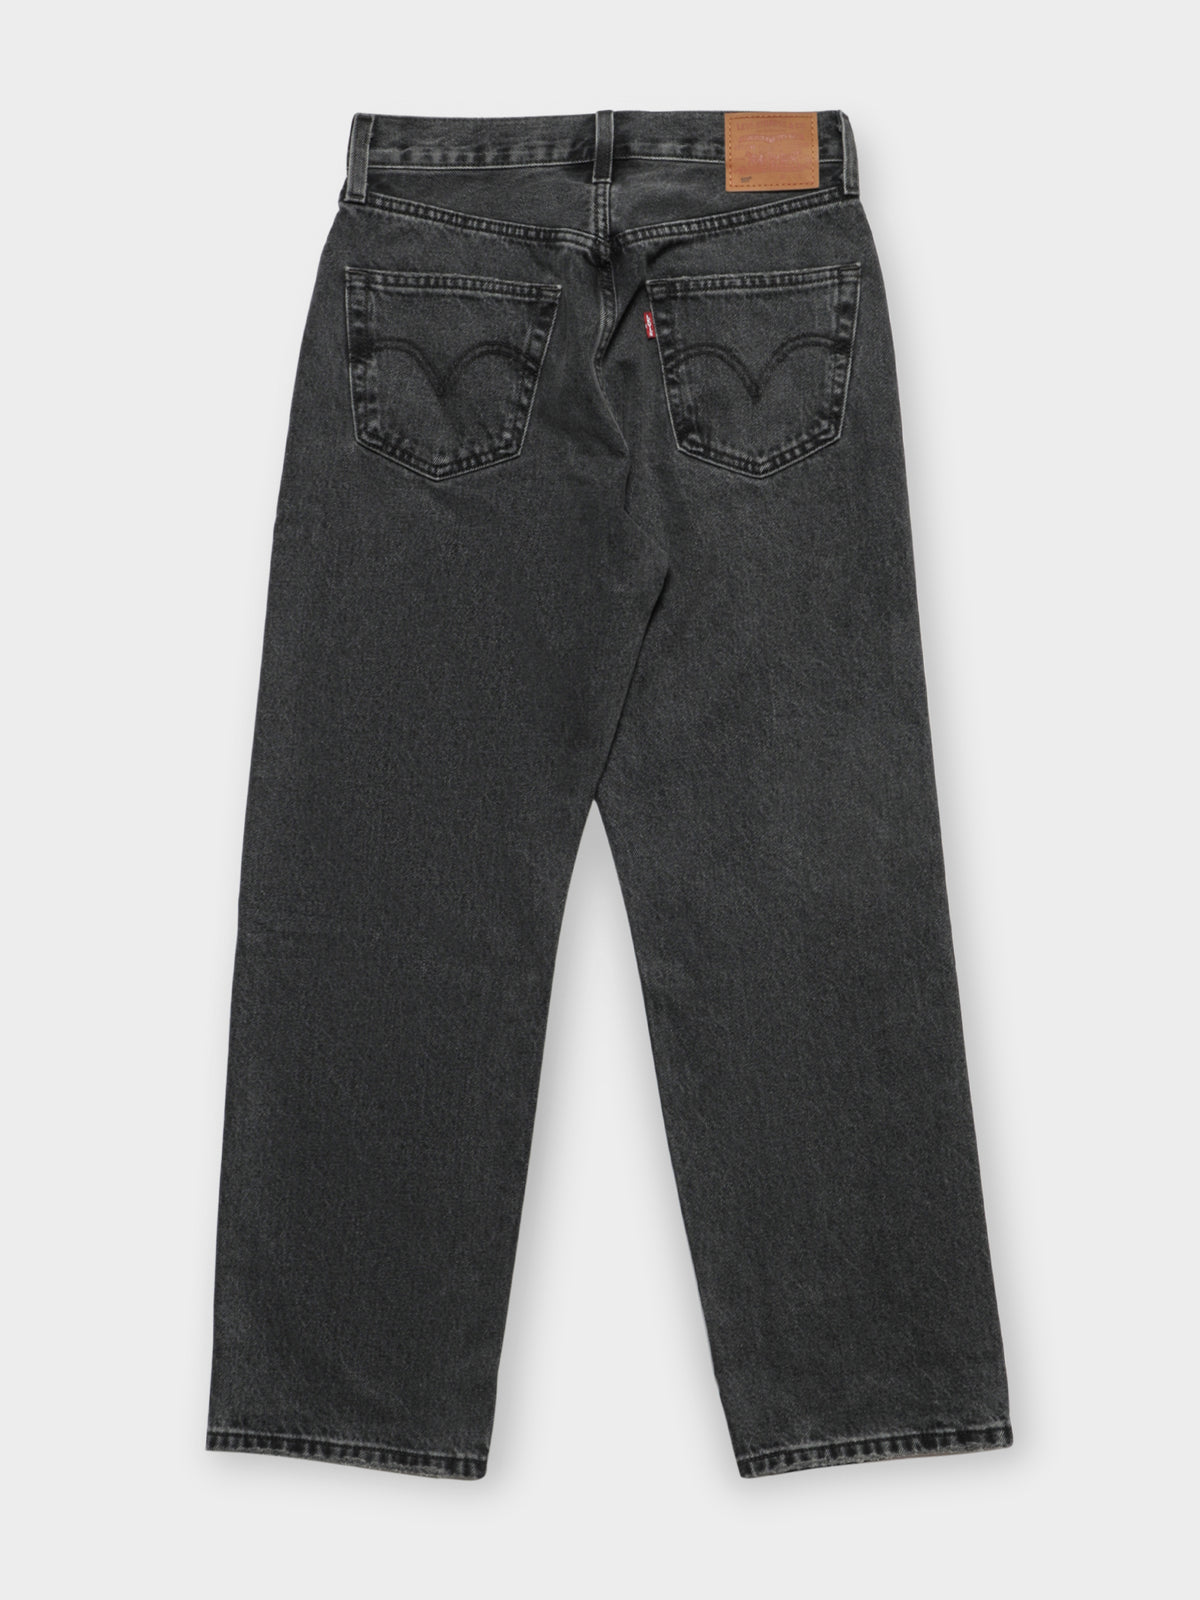 90s 501 Jeans in Fire Starter Black (28 length)